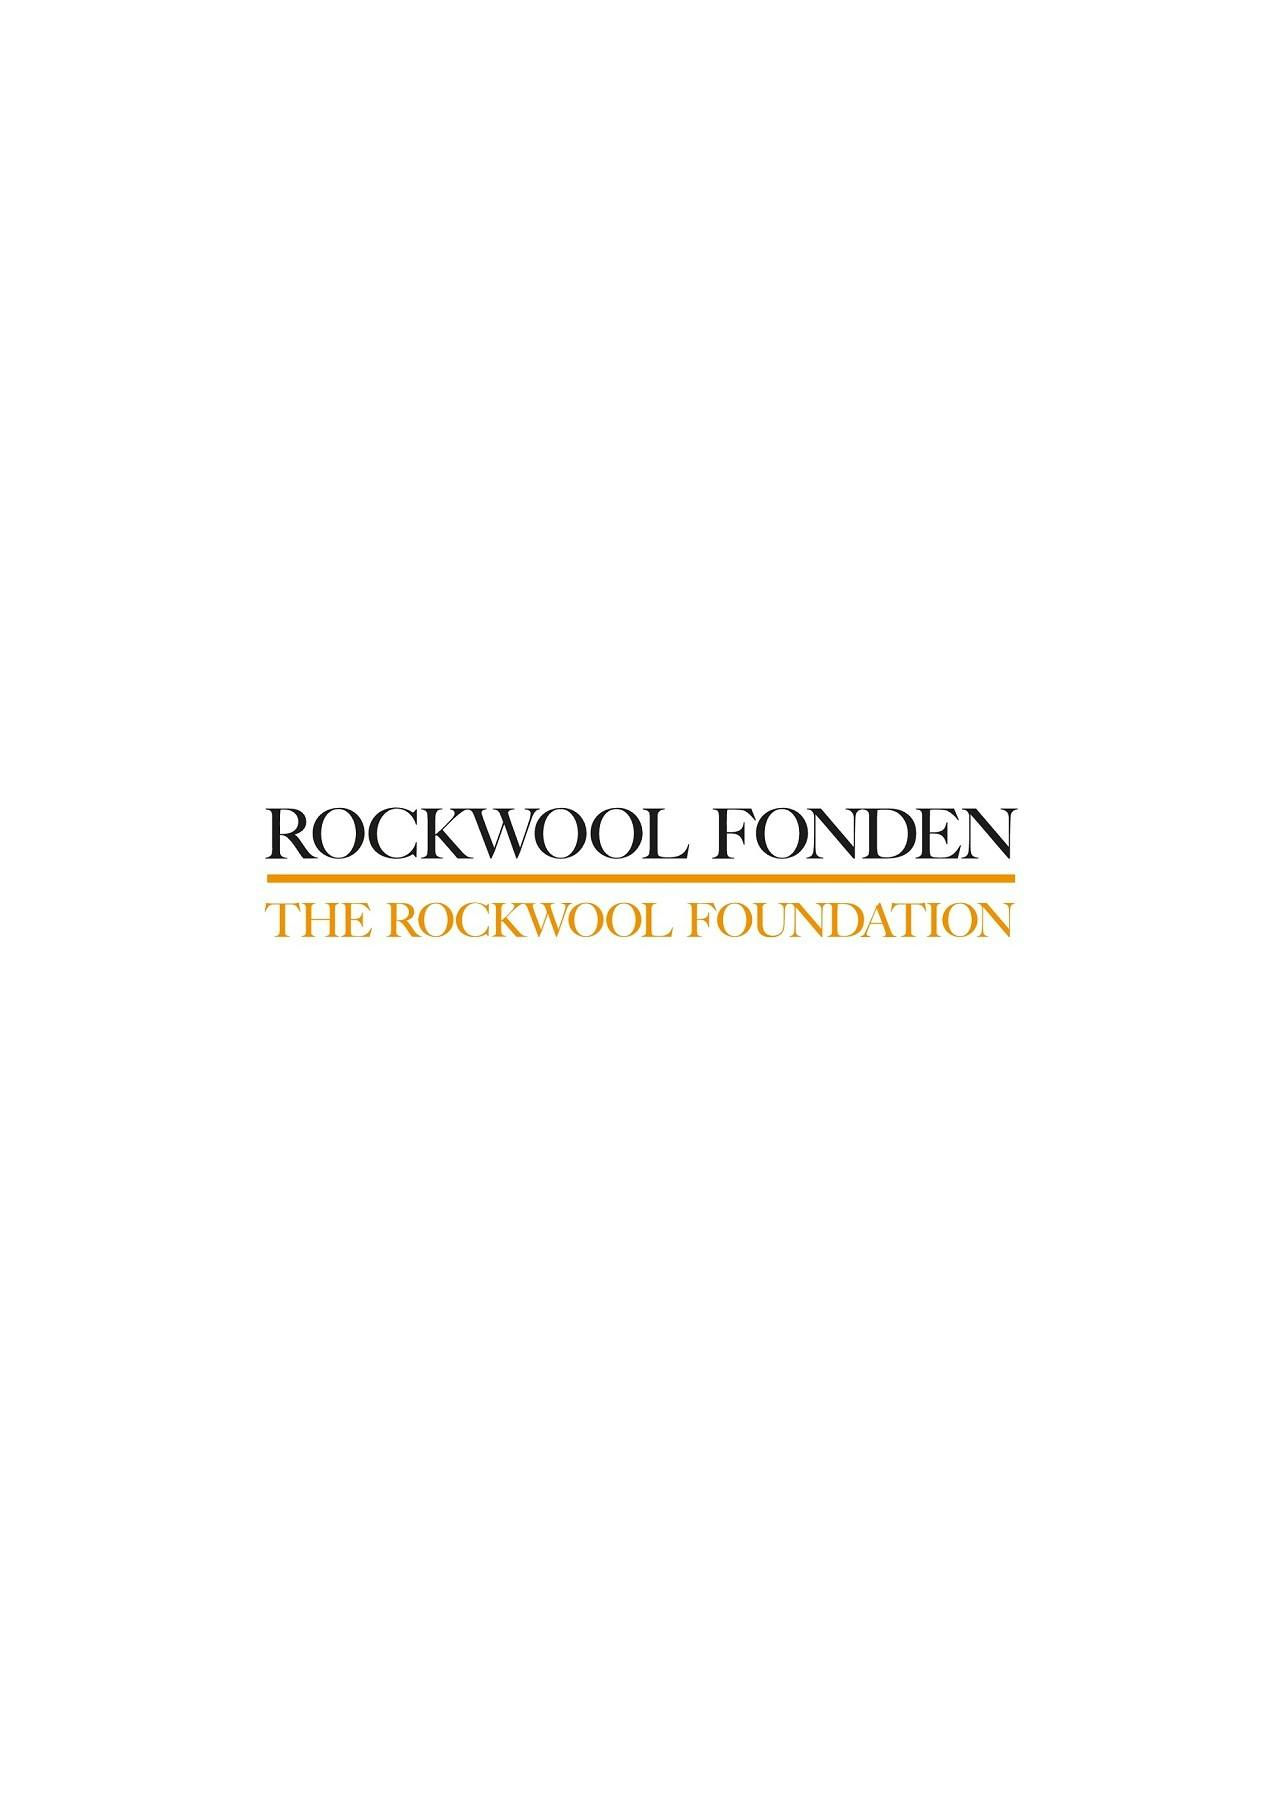 The Rockwool Foundation